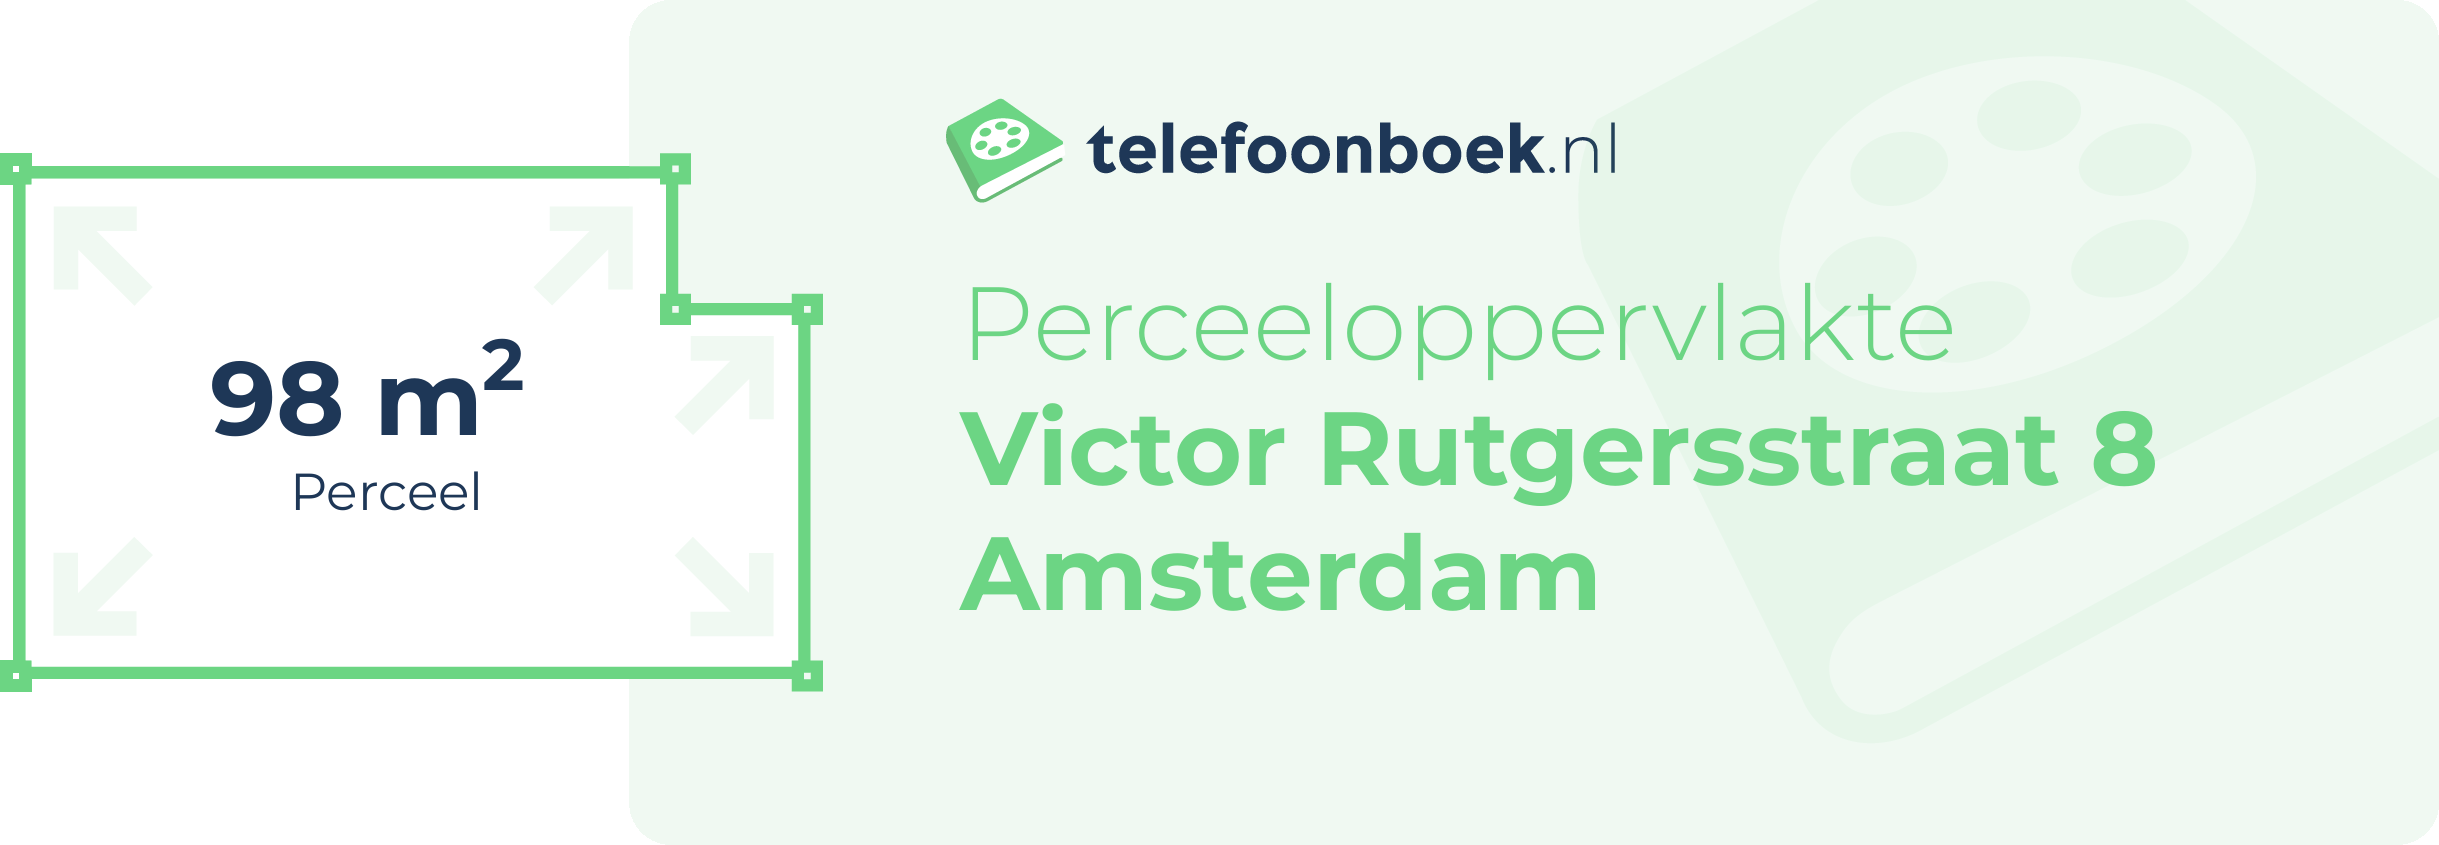 Perceeloppervlakte Victor Rutgersstraat 8 Amsterdam